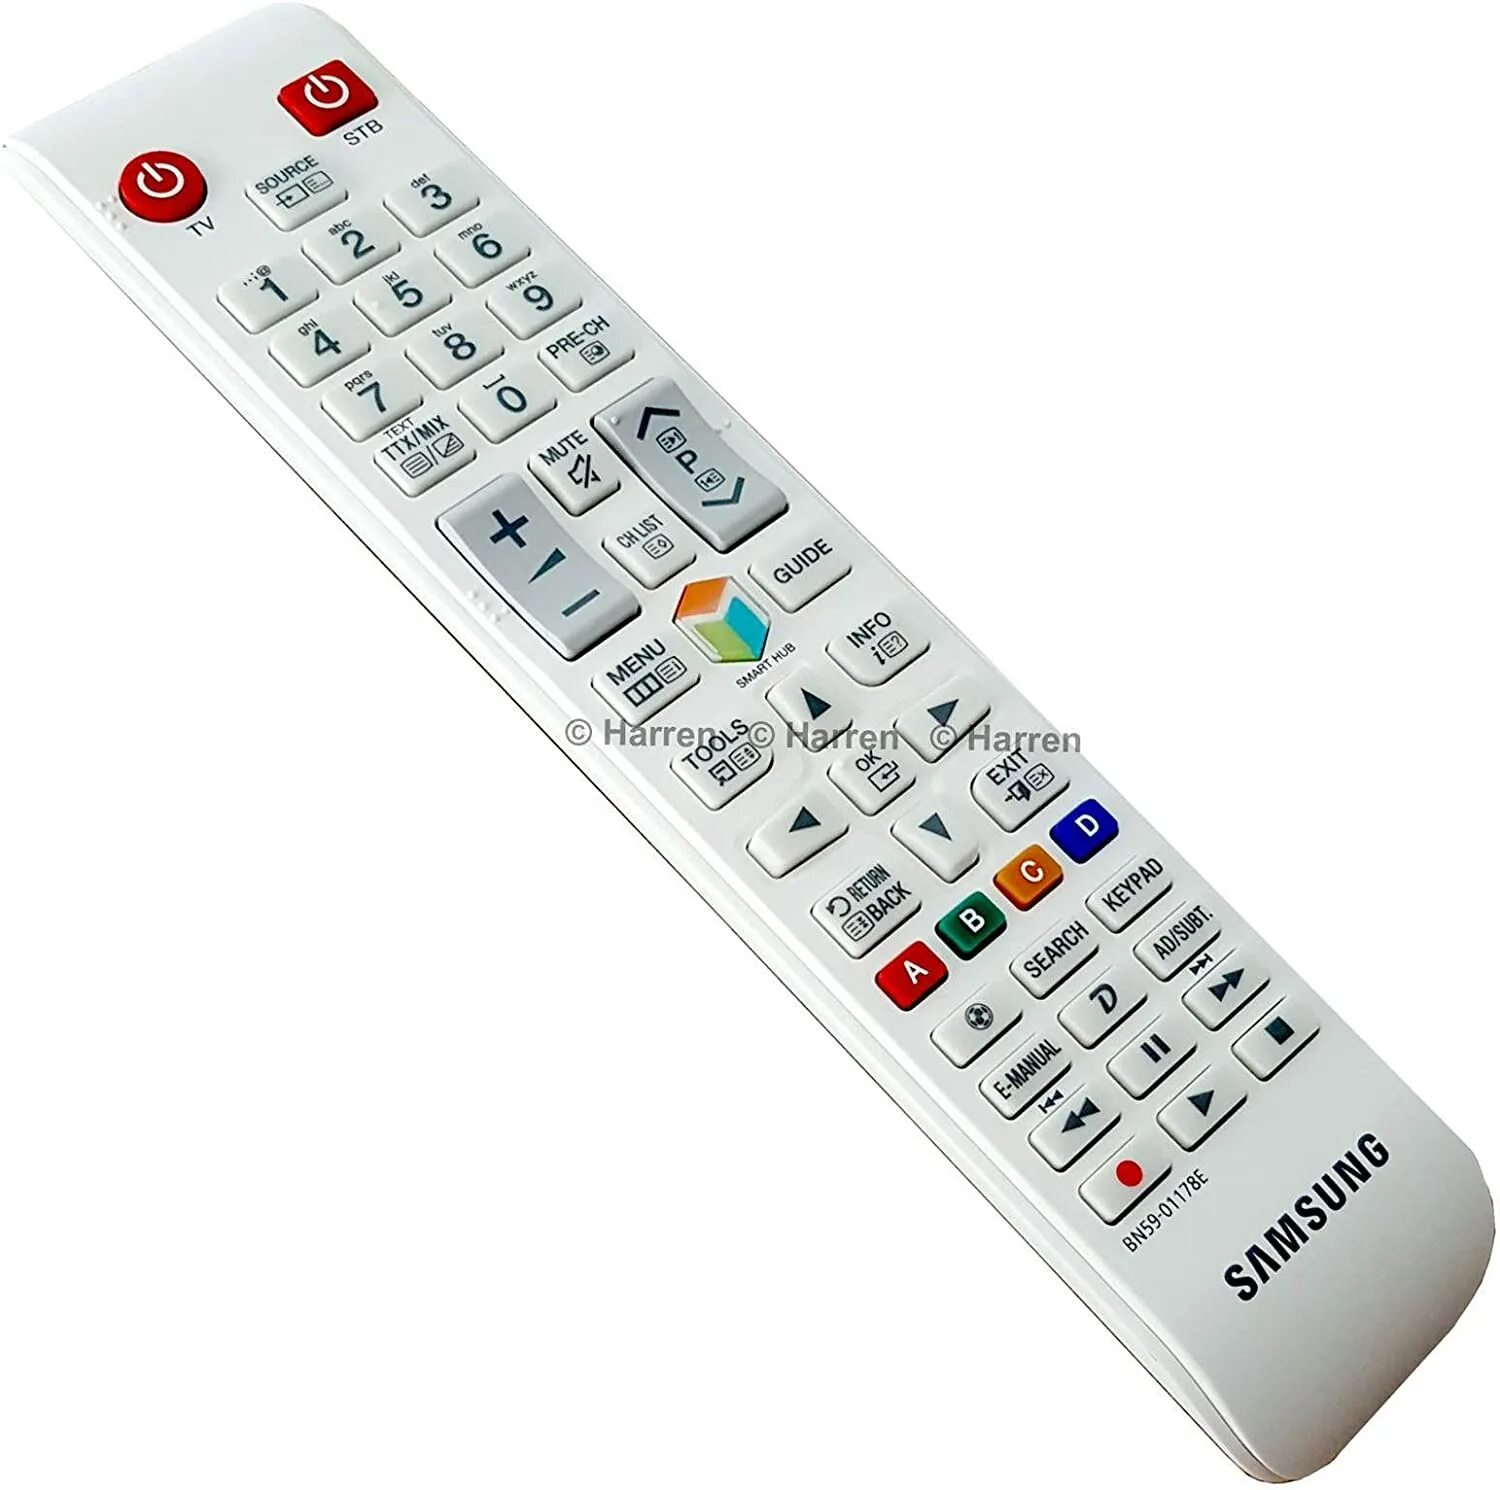 Bn59-01178b пульт. Пульт для телевизора Samsung bn59-01178b. Пульт Samsung bn59. Пульт Samsung Smart TV белый.